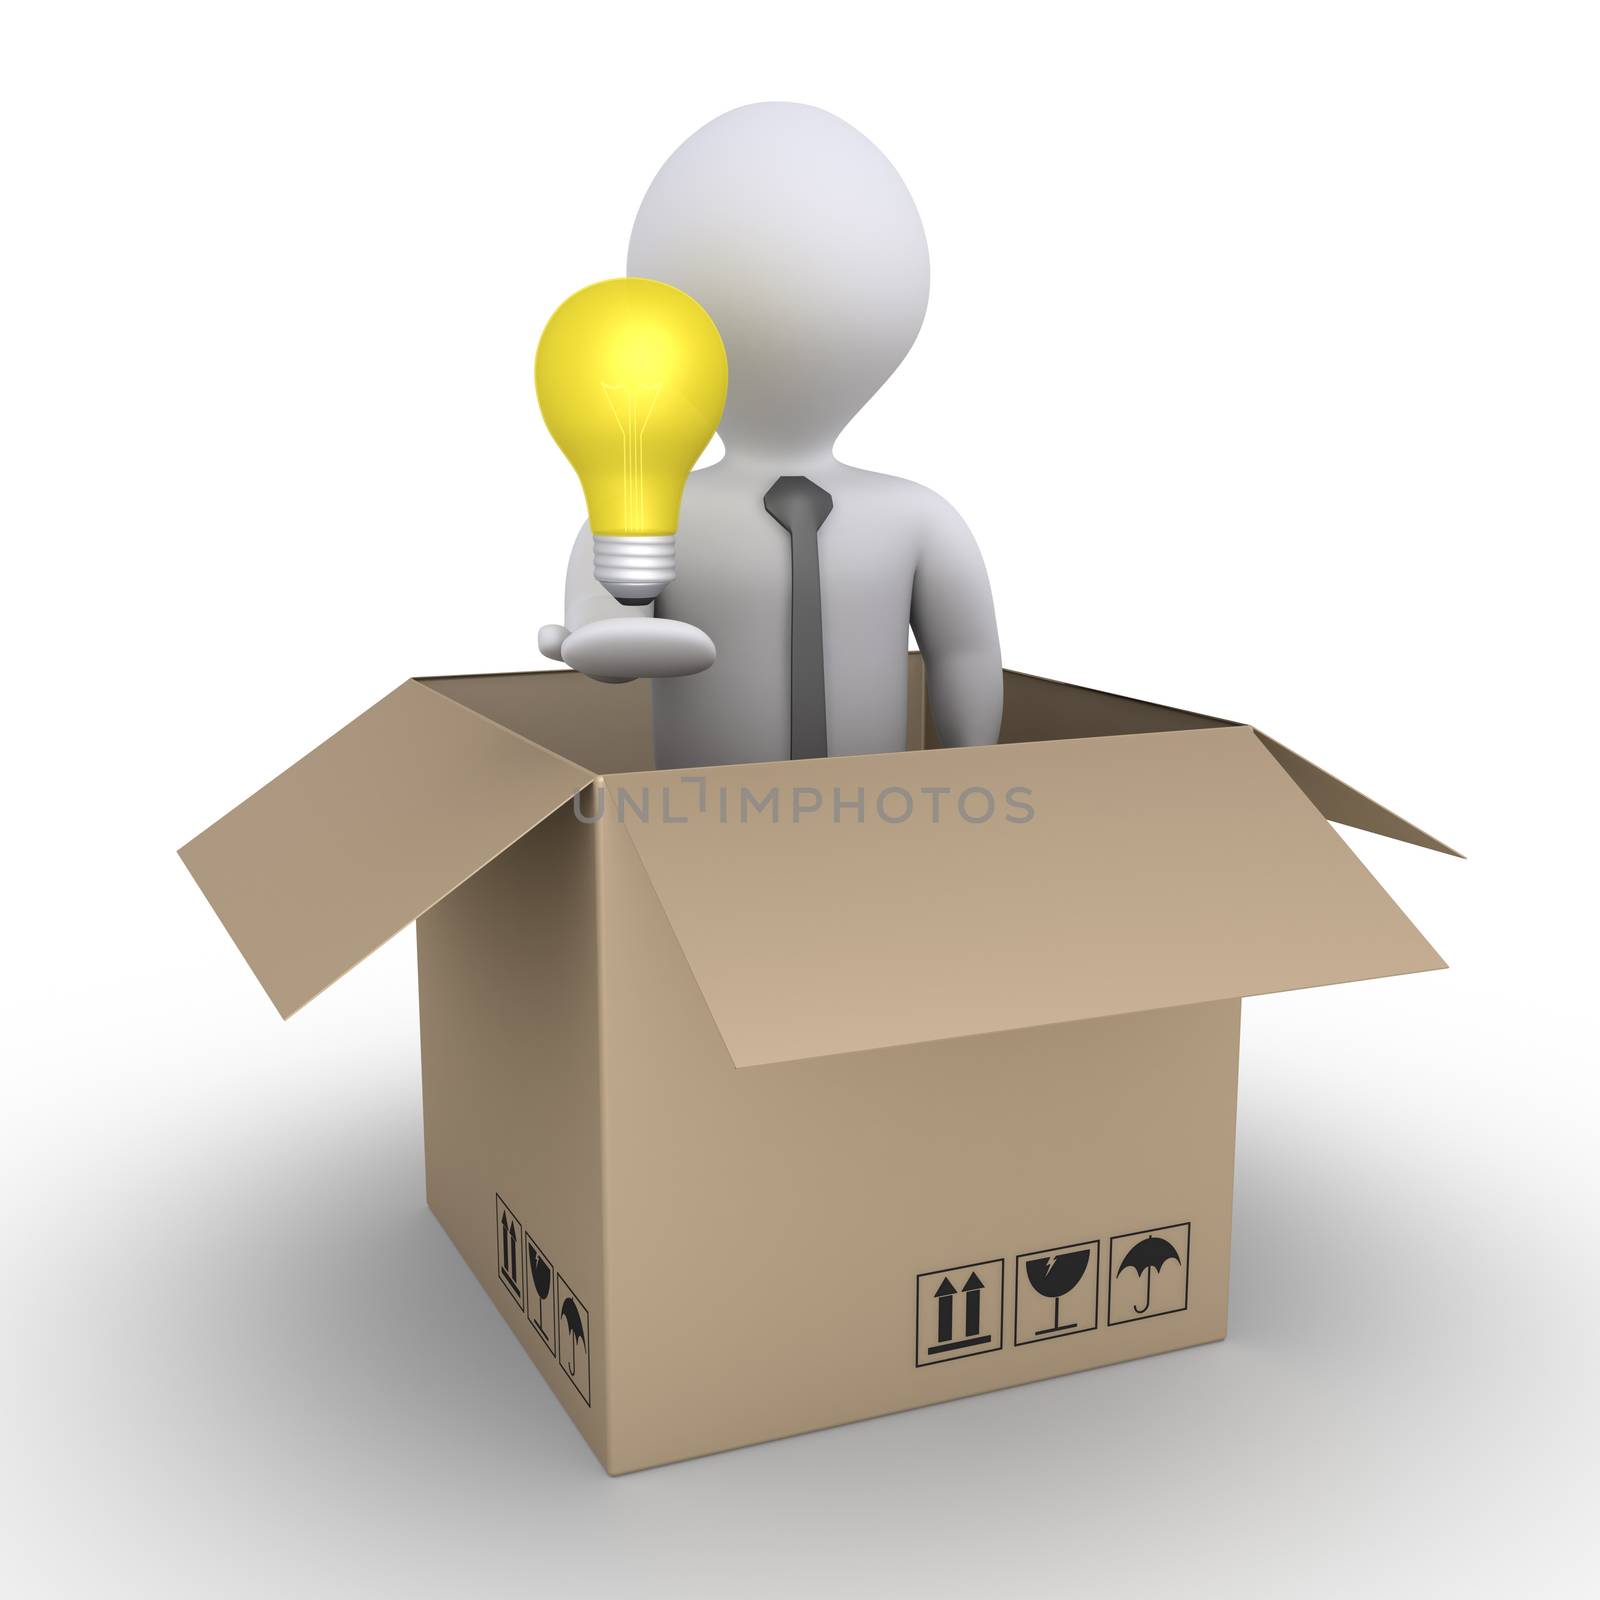 Businessman holding a light bulb is inside a carton box